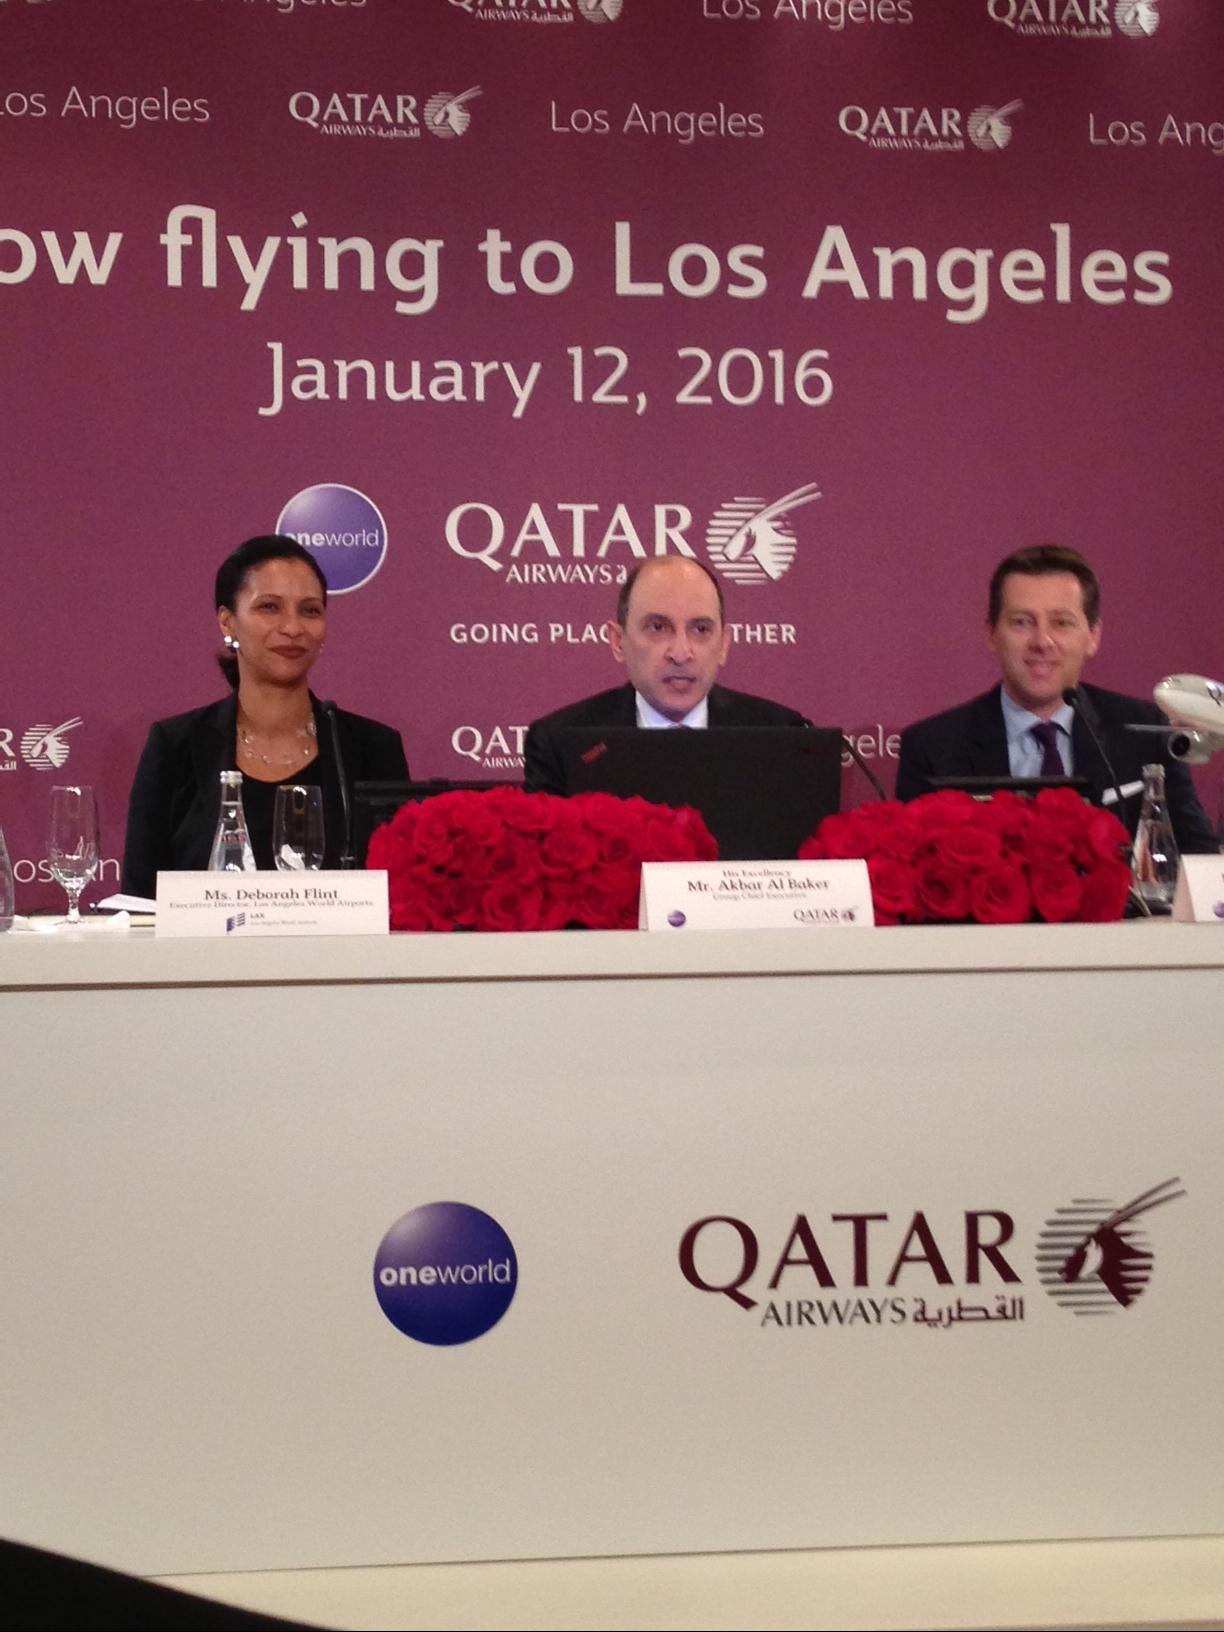 Self Photos / Files - Qatar Press Conference